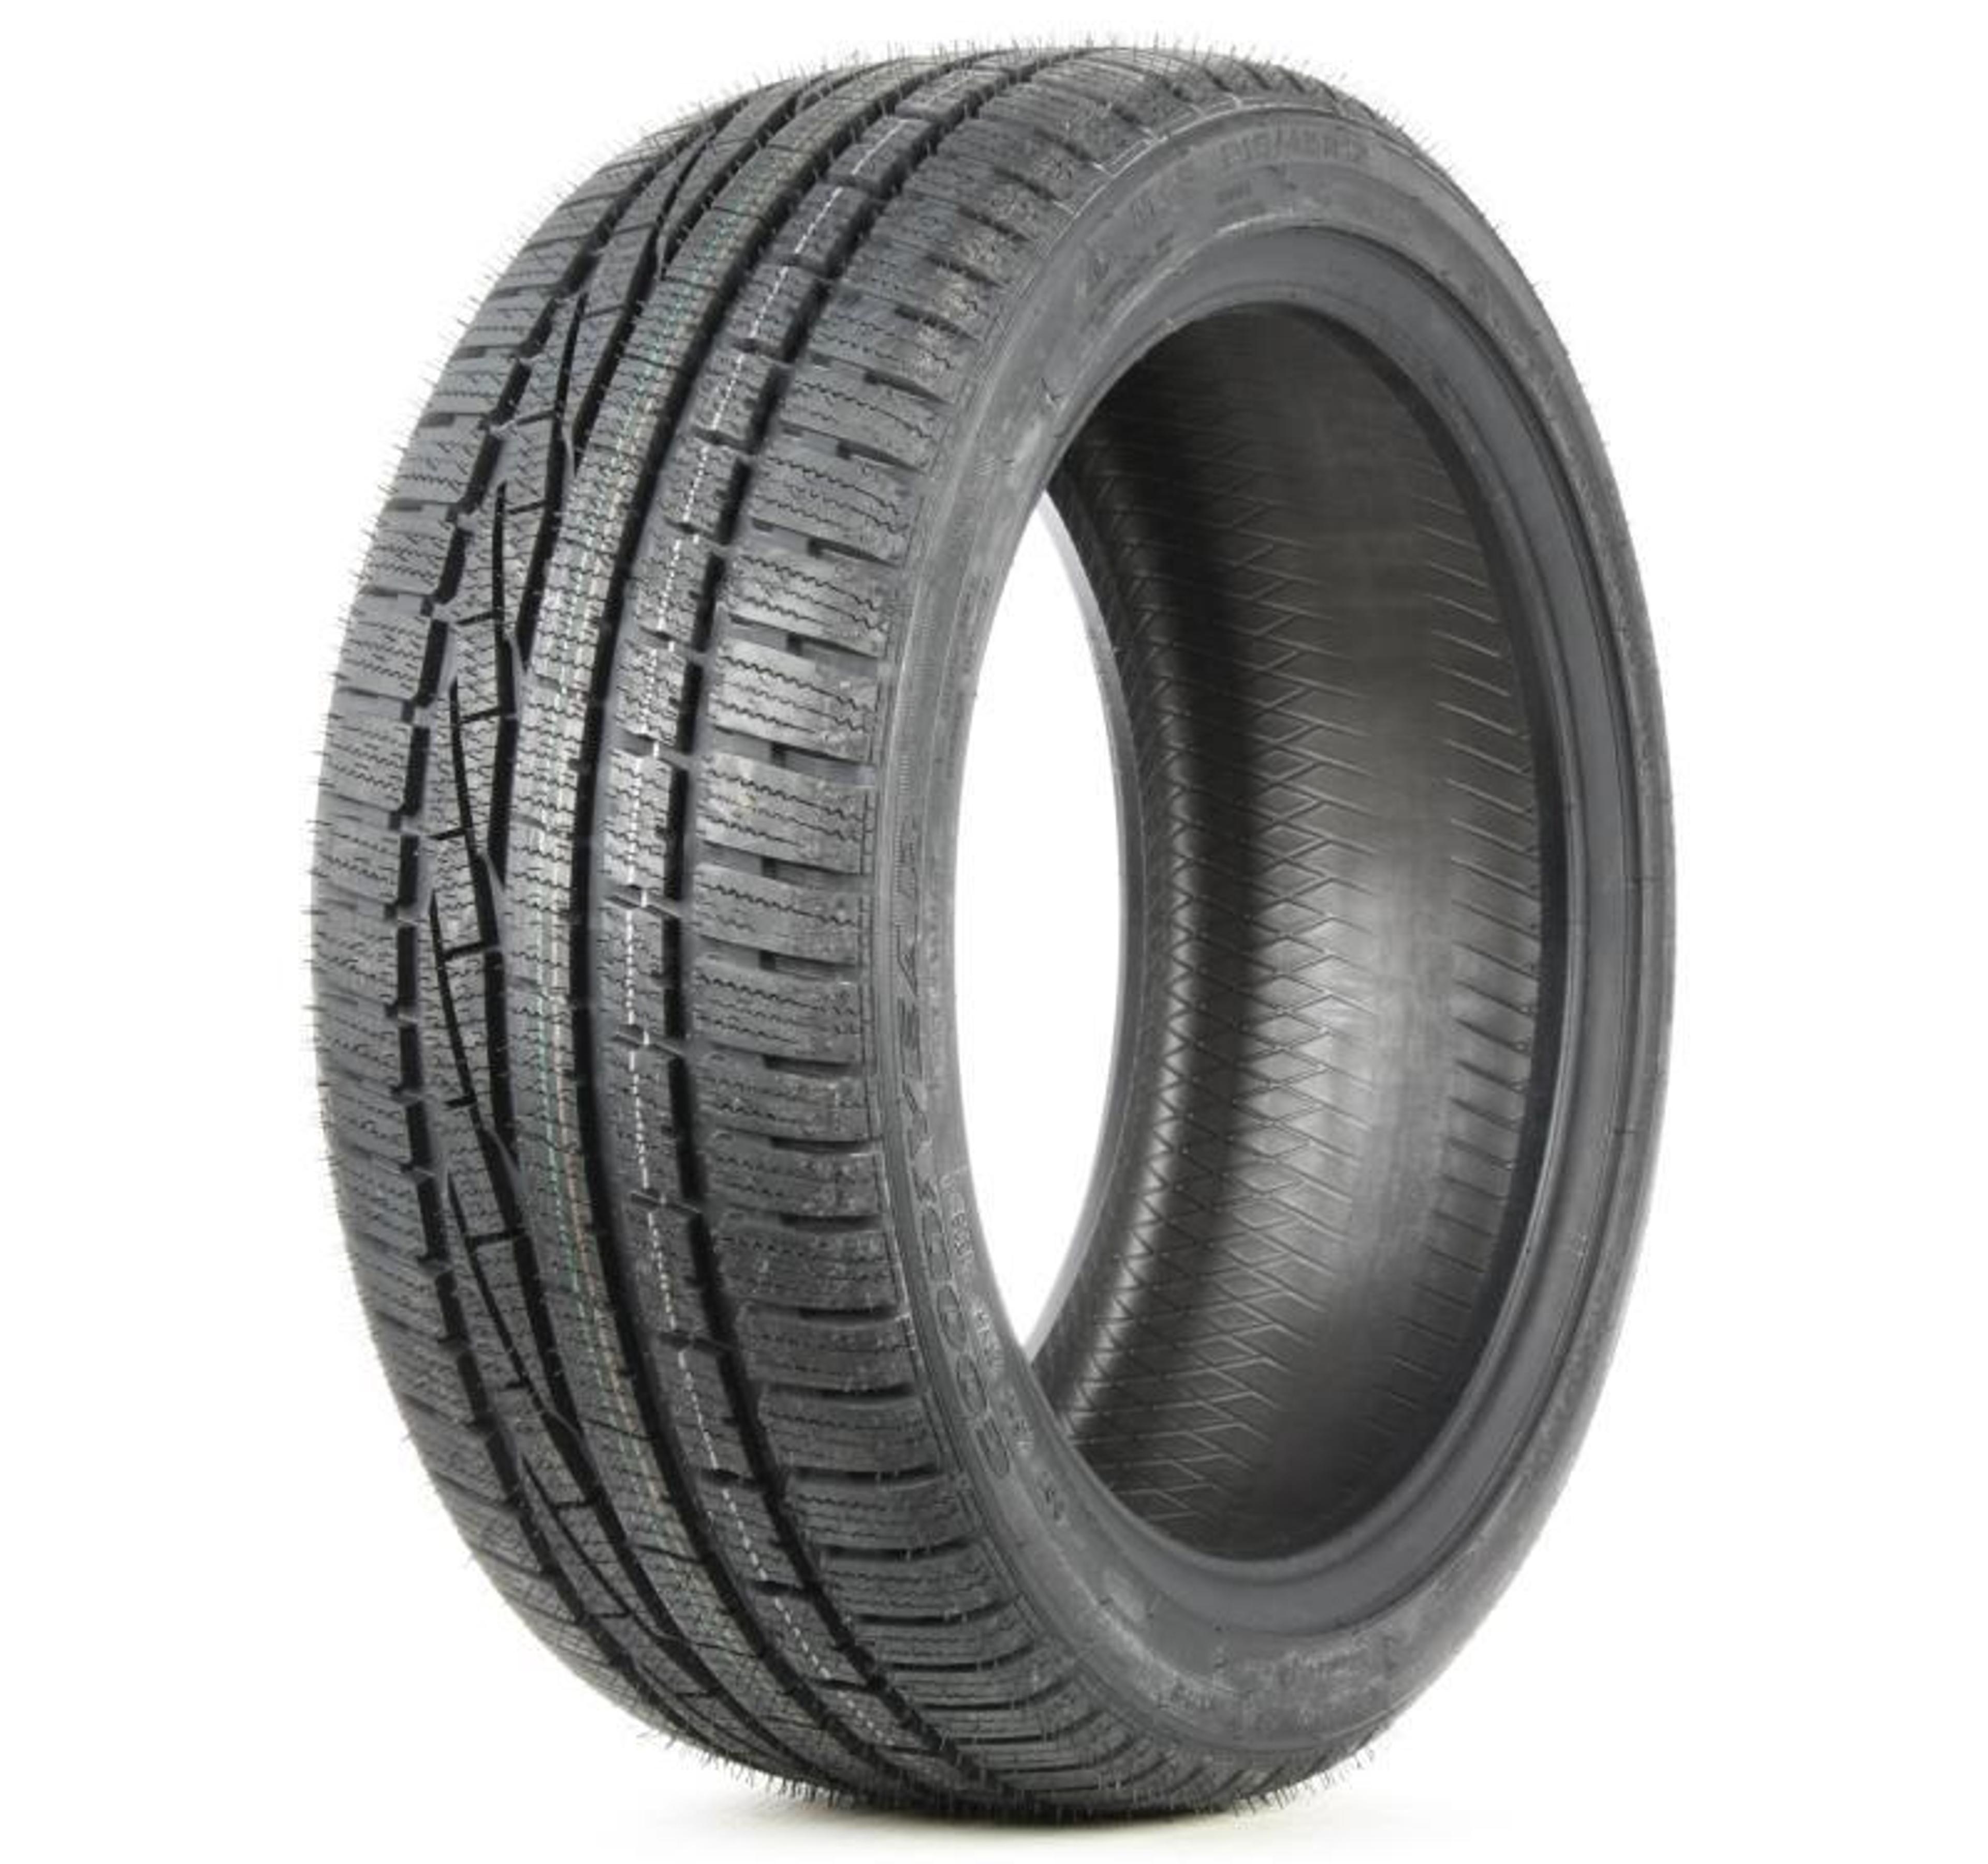 | Online Grip Ultra Tires Performance SimpleTire Goodyear Buy